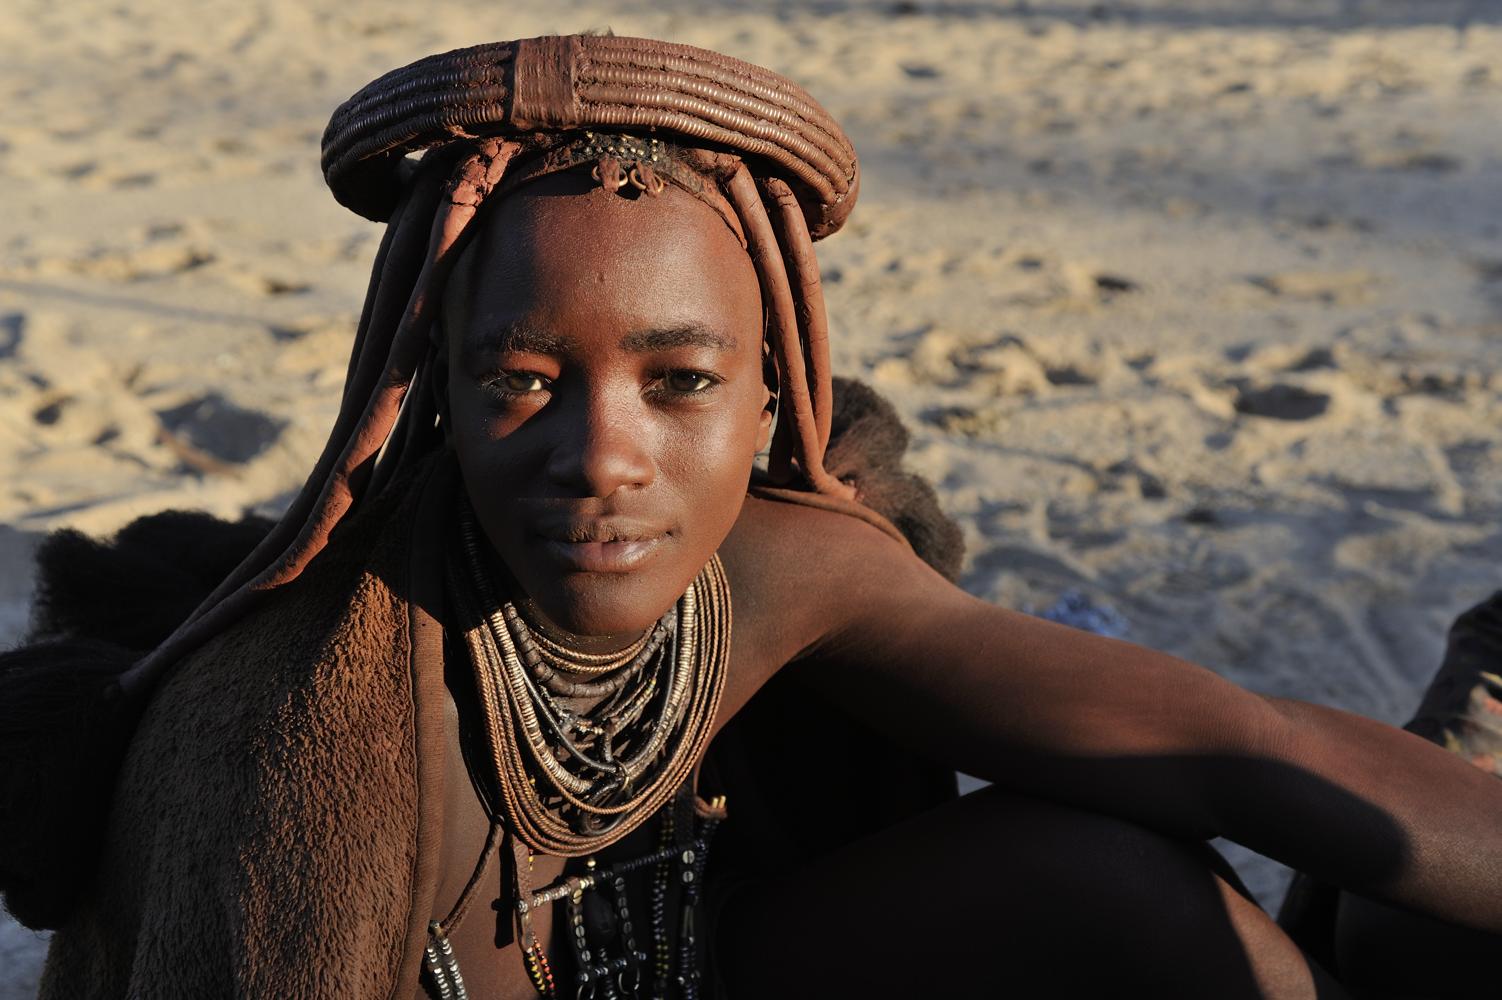 namibia2015-0192-thijsheslenfeldA.jpg